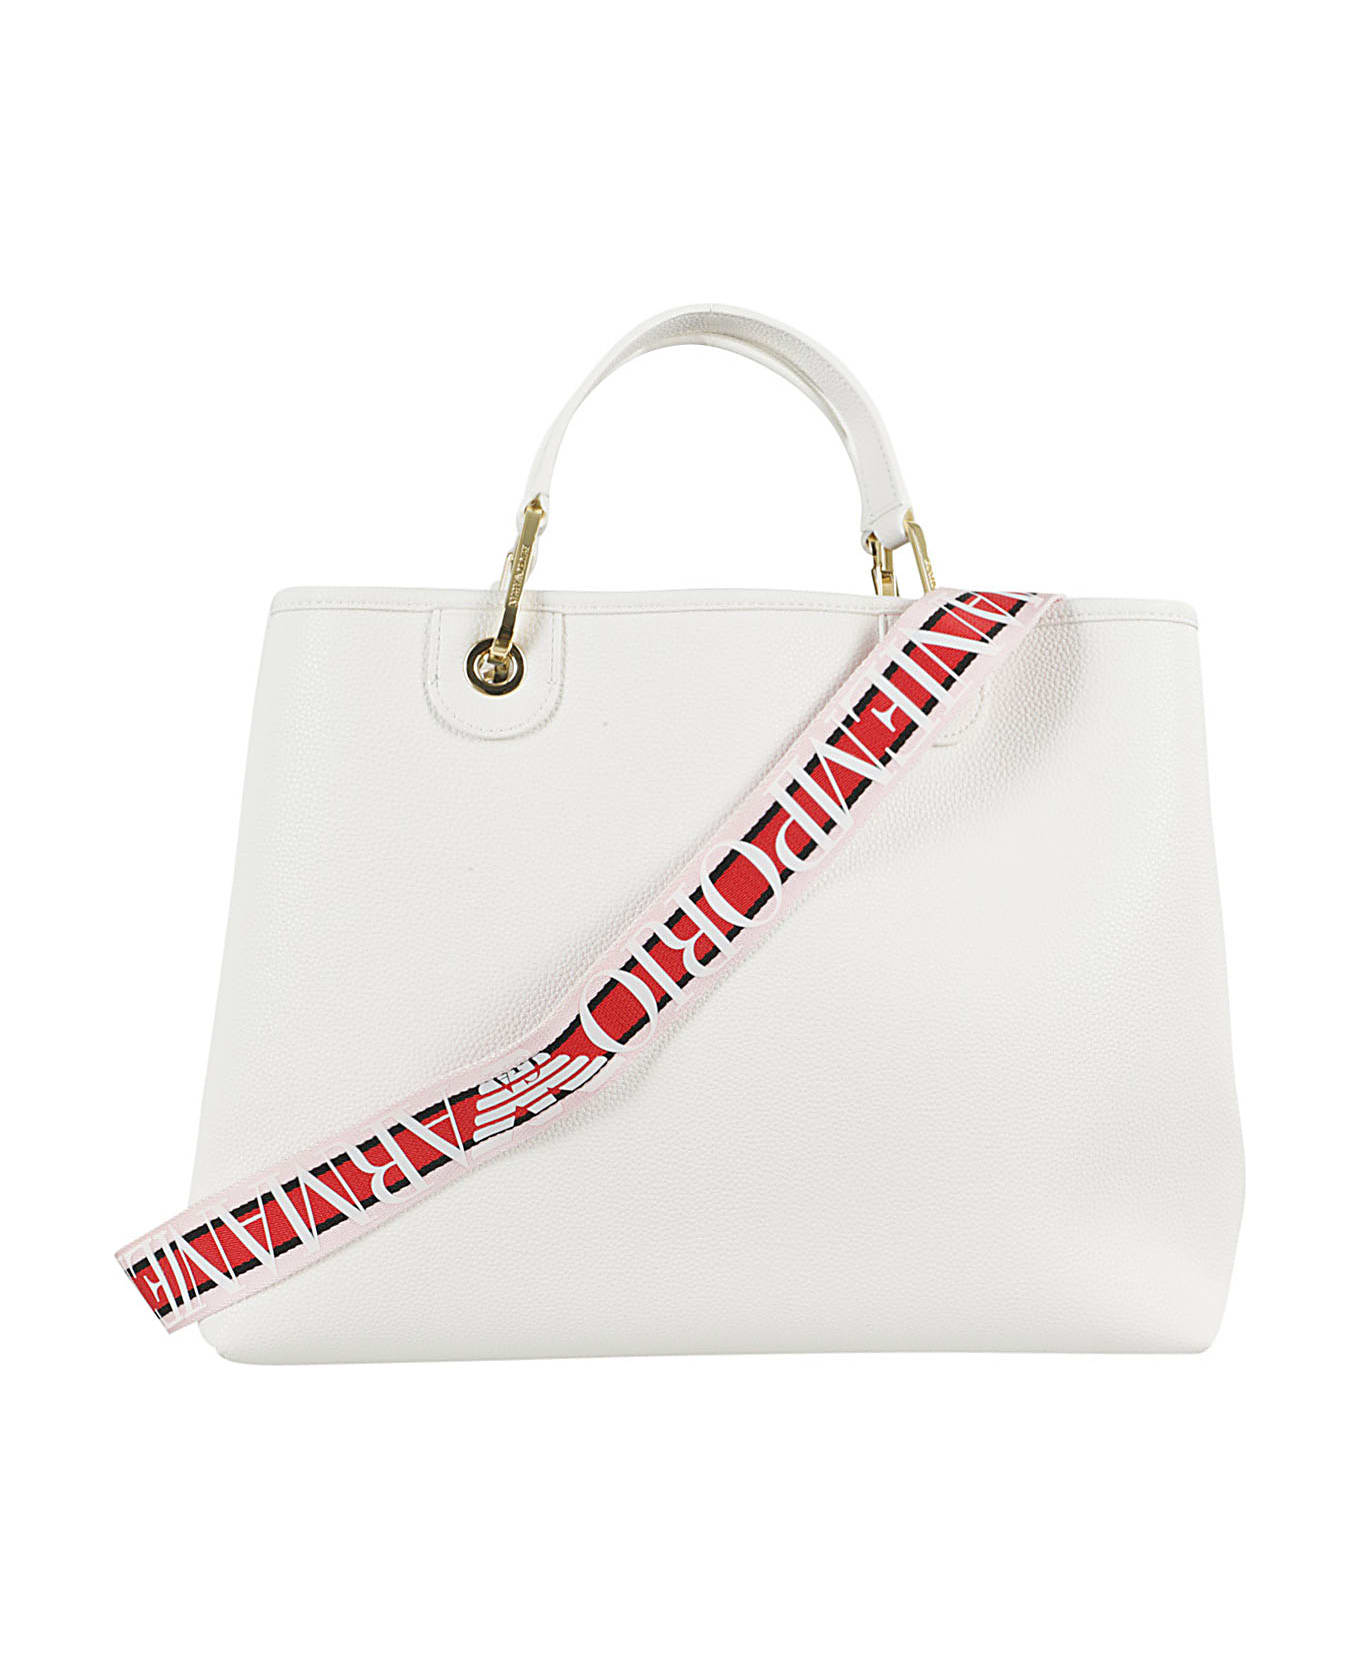 Emporio Armani Shopping Bag - Bianco Cuoio